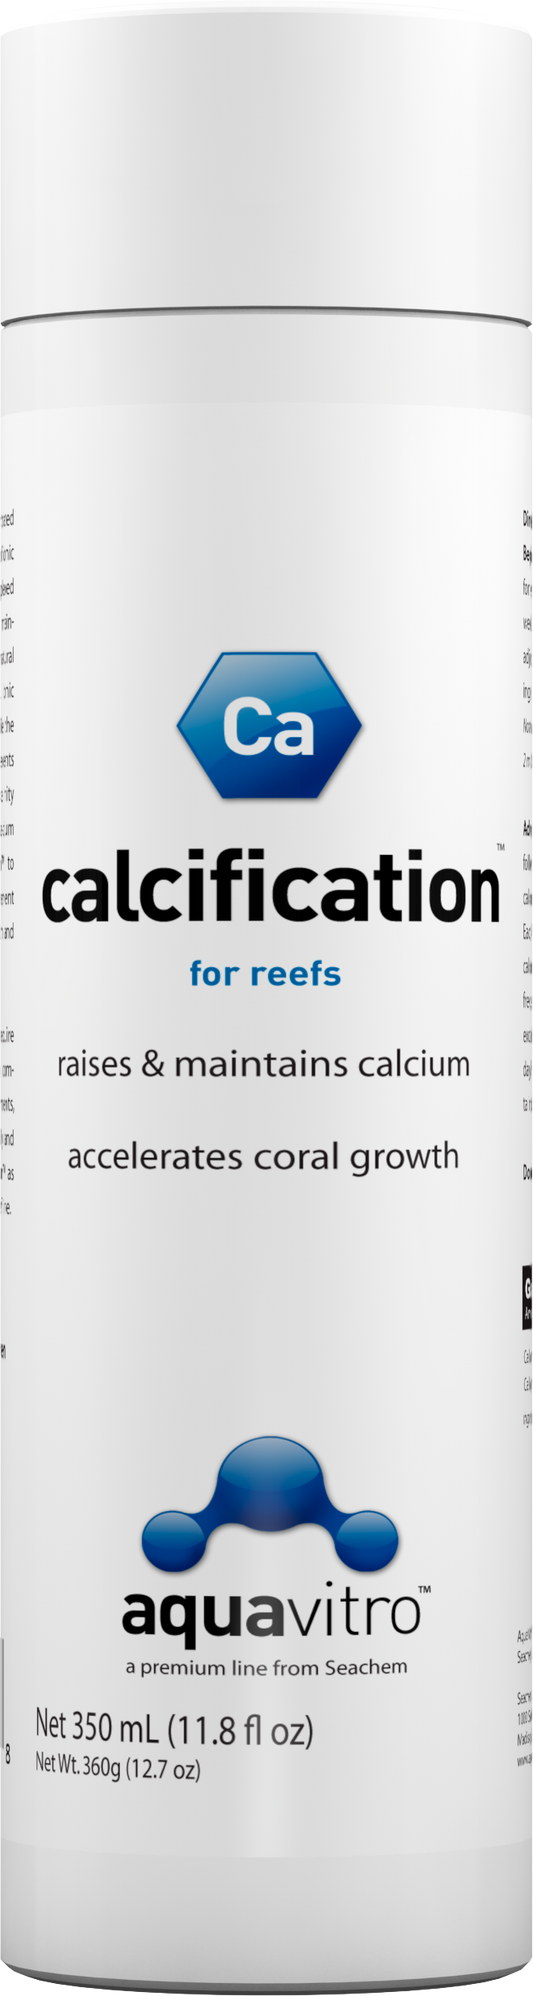 Aquavitro Calcification